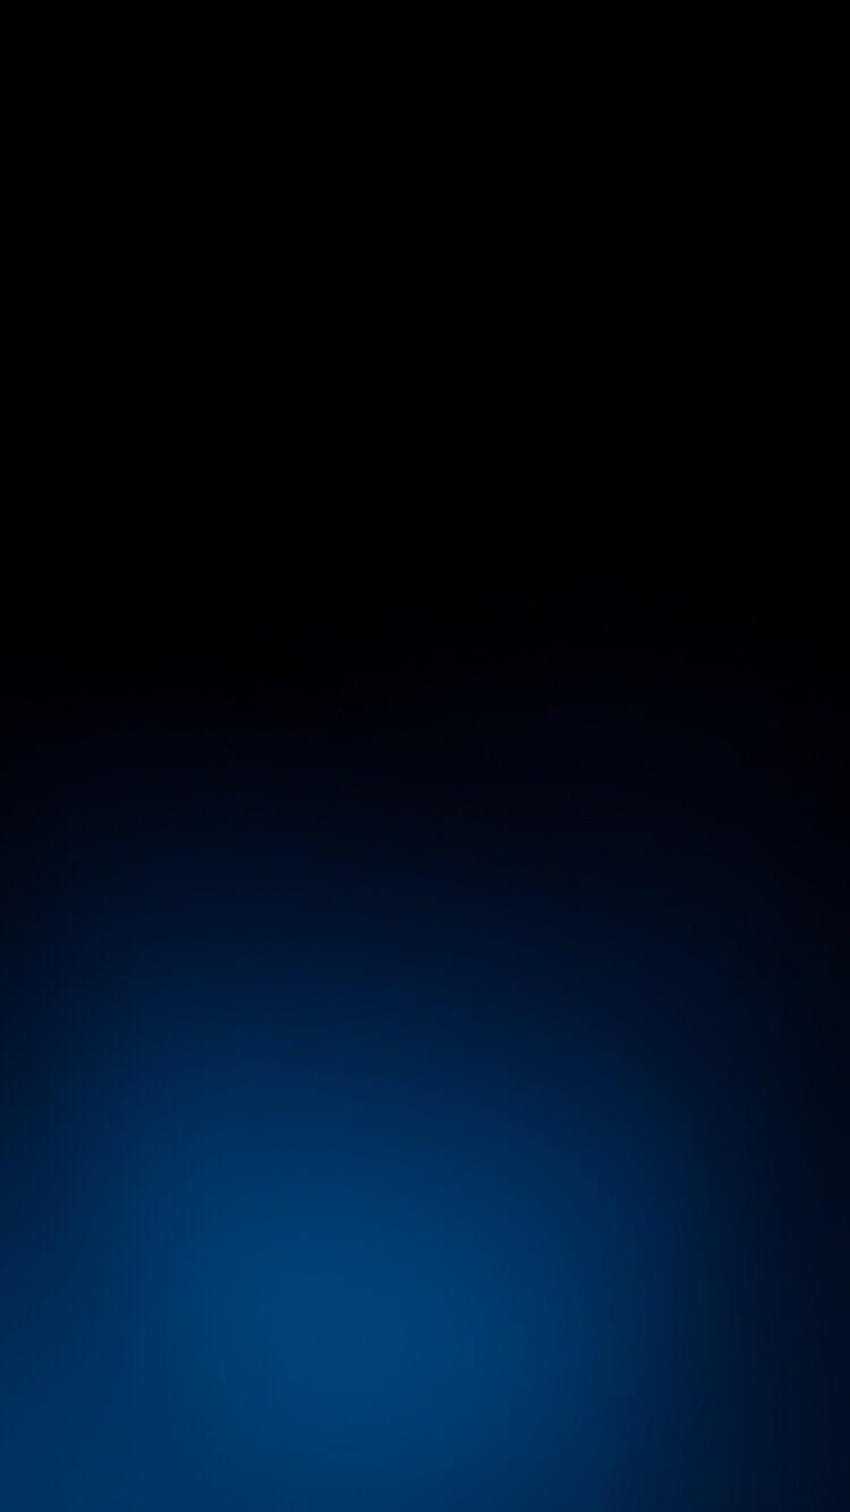 OLED, degradado negro y azul: i, oled negro fondo de pantalla del teléfono